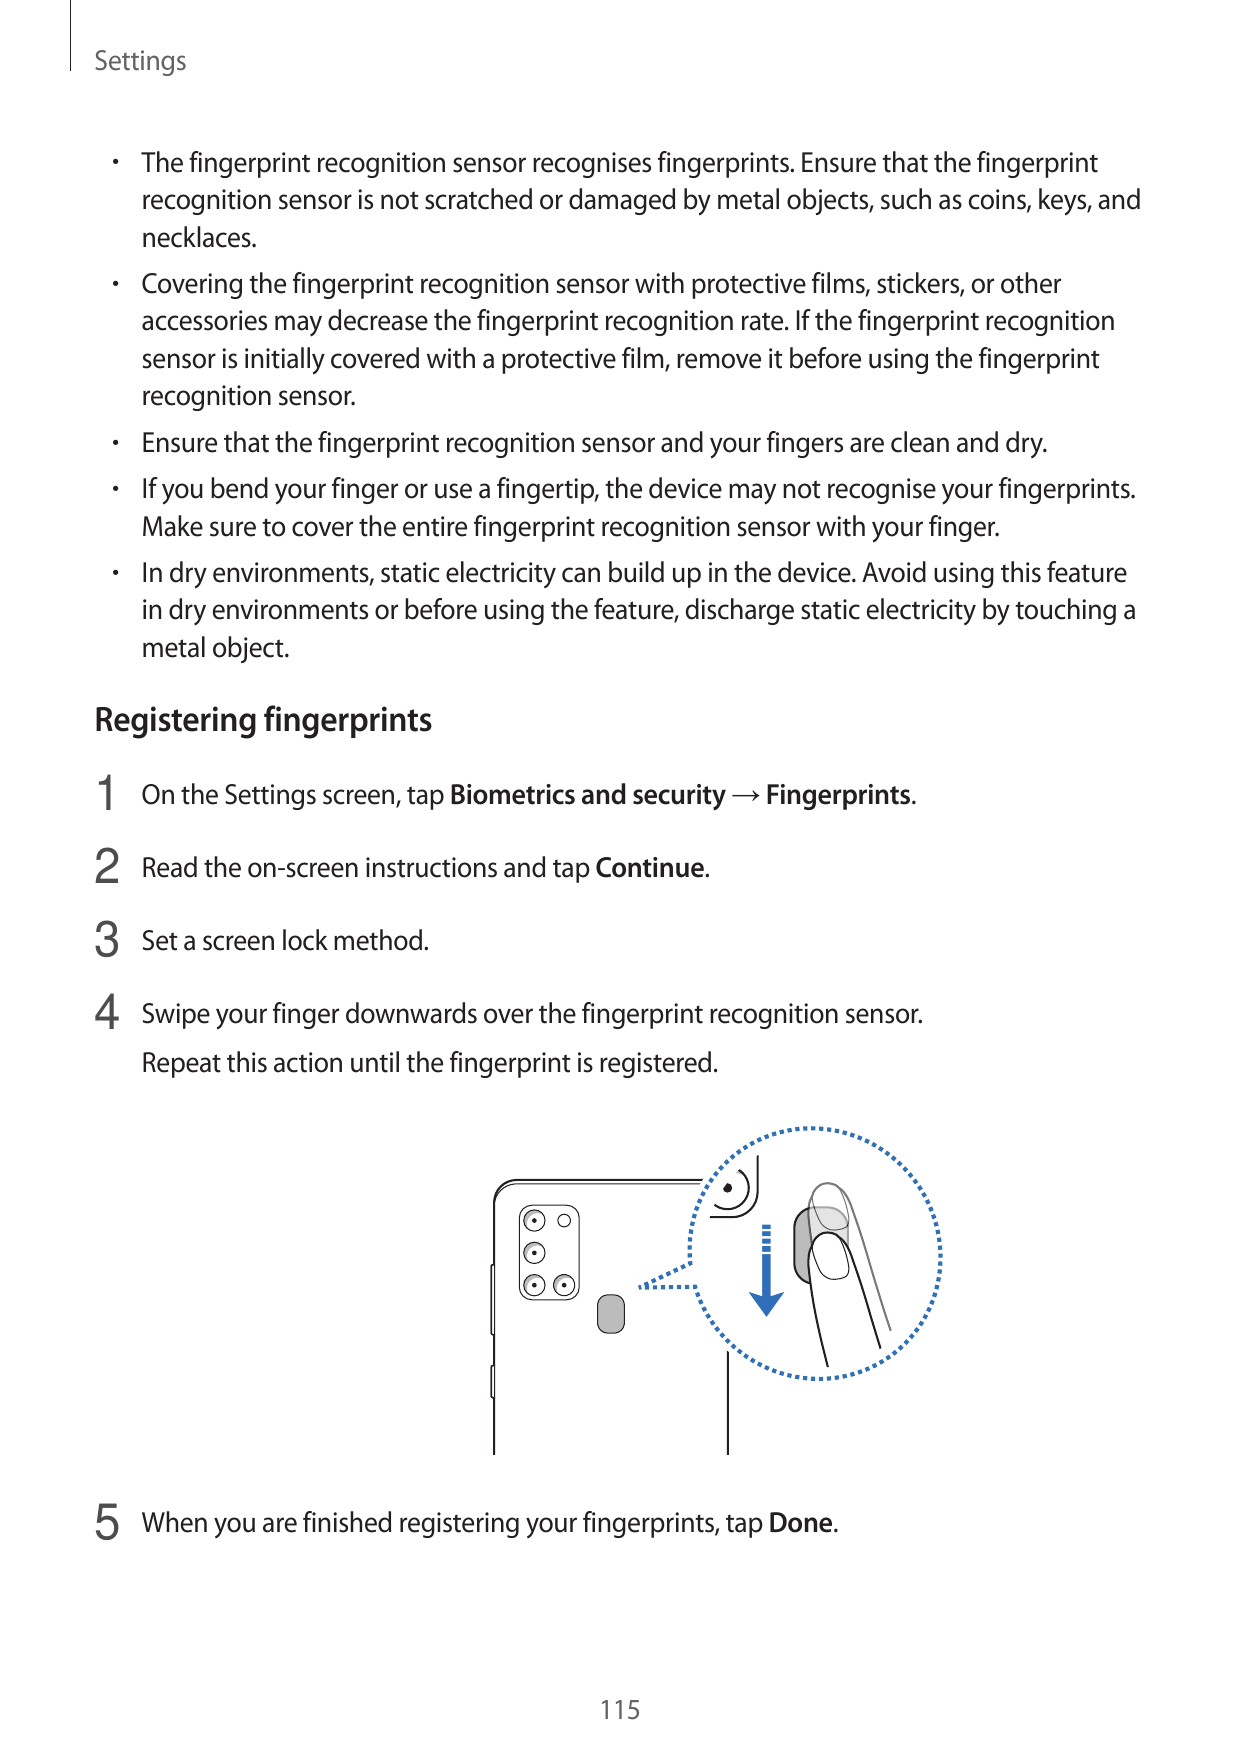 Settings• The fingerprint recognition sensor recognises fingerprints. Ensure that the fingerprintrecognition sensor is not scrat